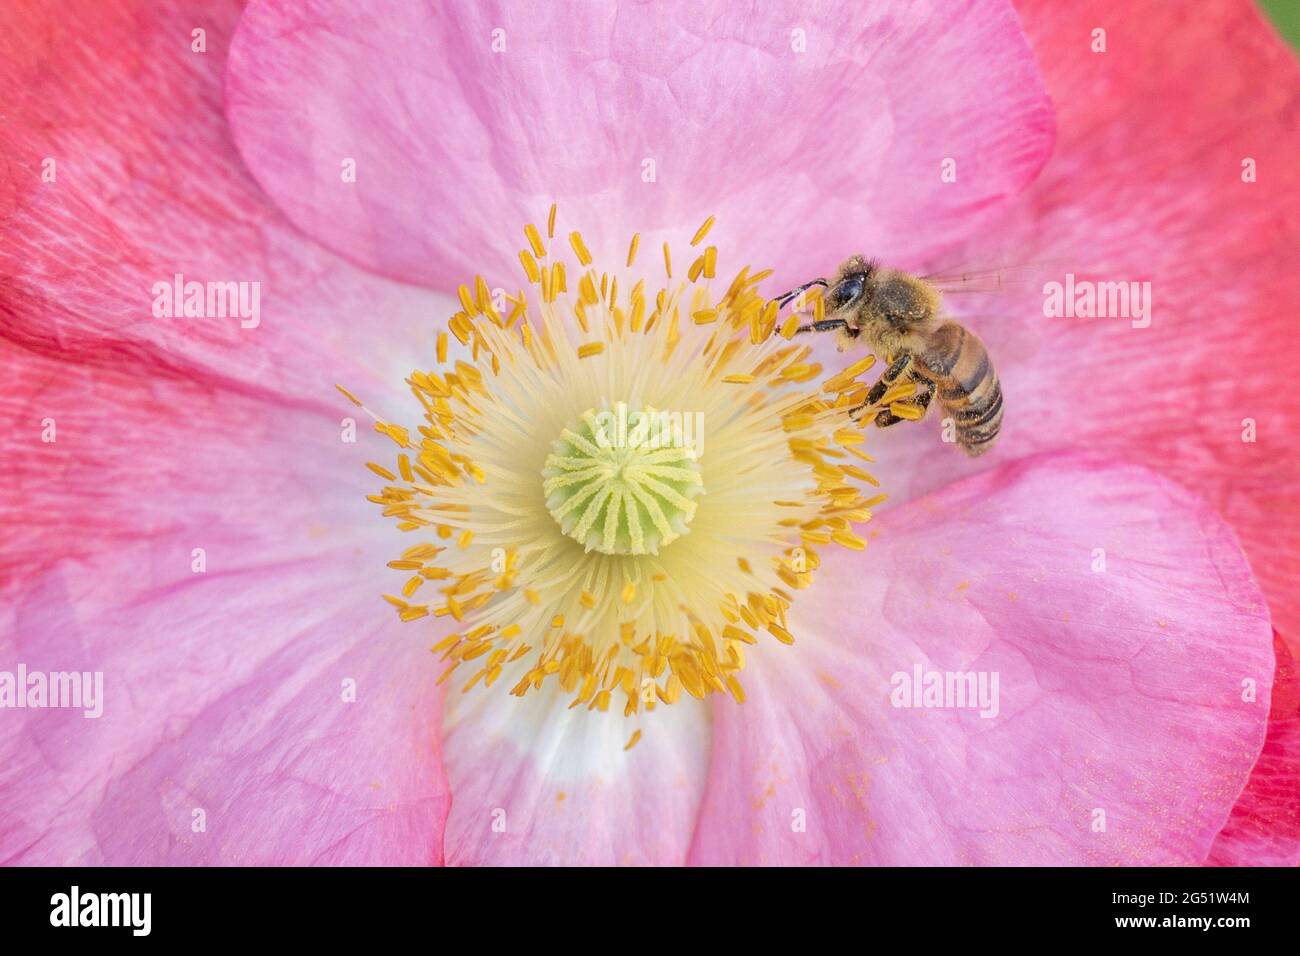 Honeybee on pink flower Stock Photo